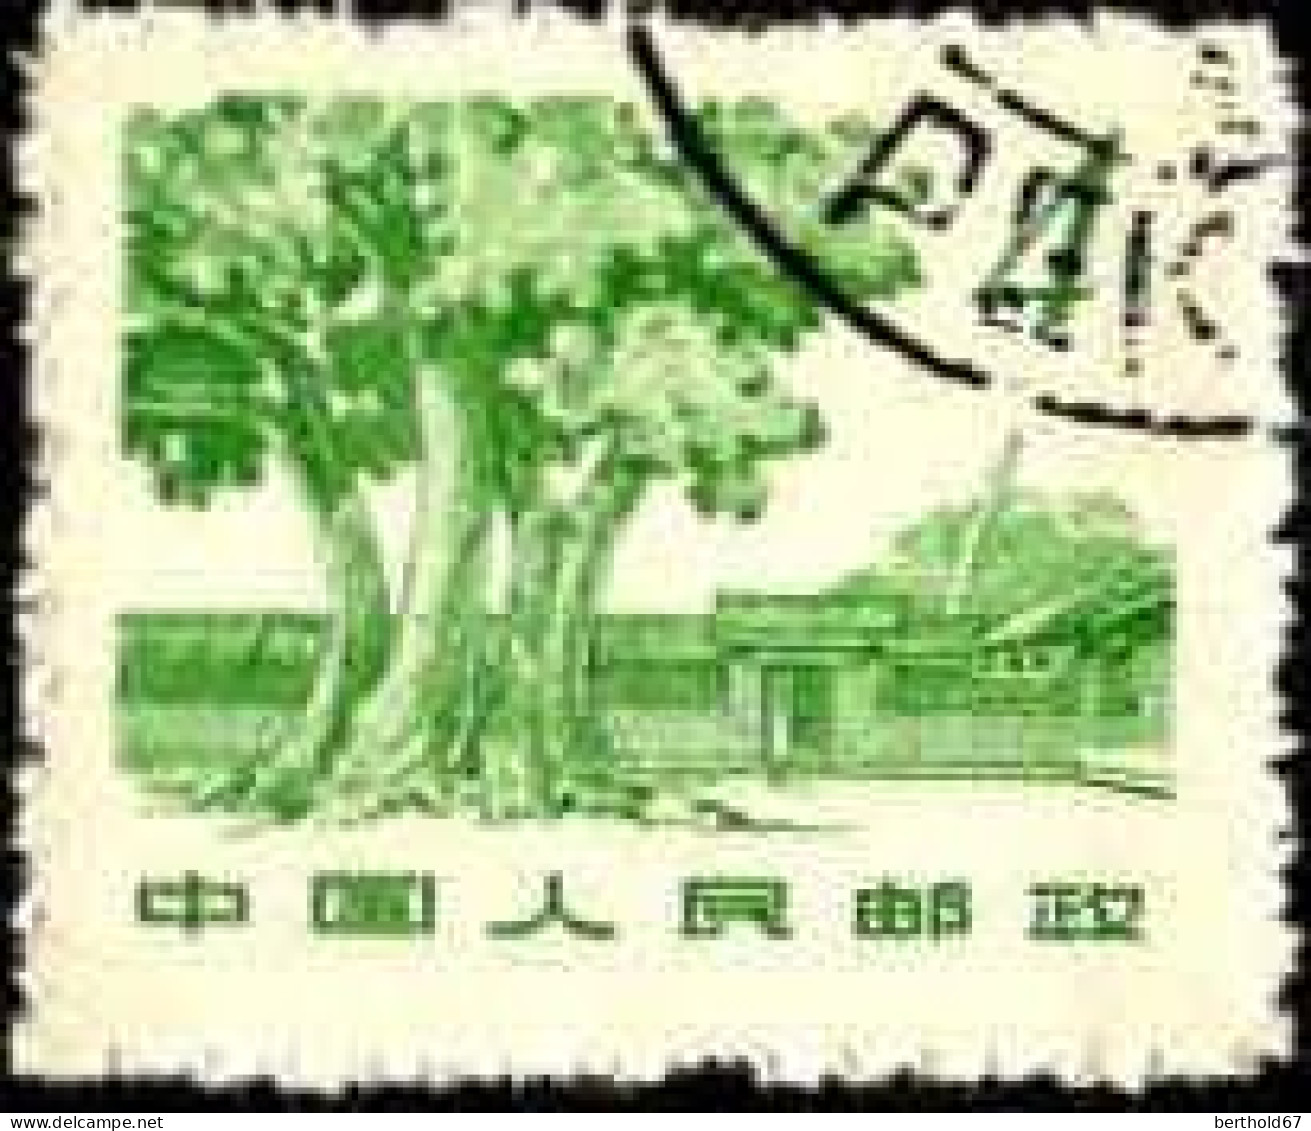 Chine Poste Obl Yv:1435 Mi:678 Sha Cho Pa Building Juikin (Beau Cachet Rond) - Oblitérés